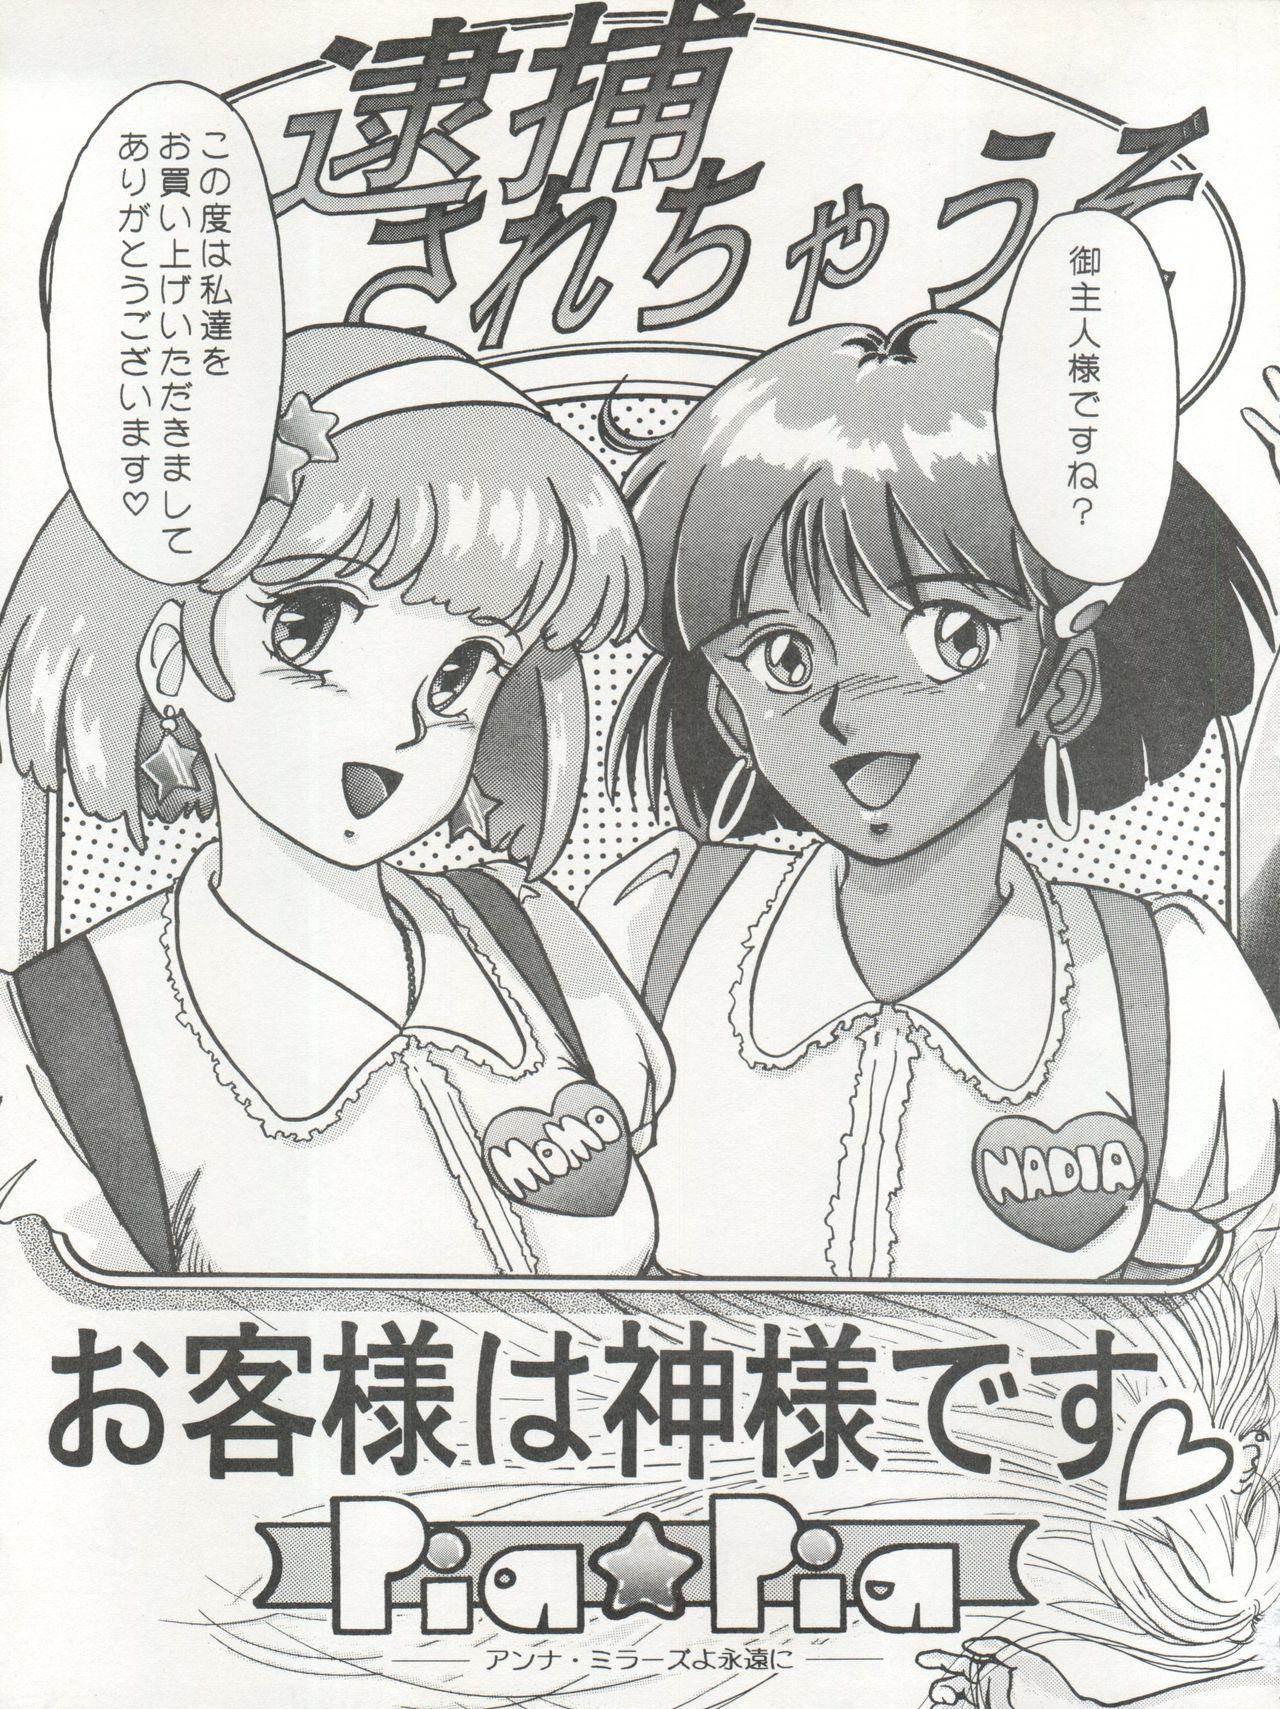 Sub 逮捕されちゃうぞ - Fushigi no umi no nadia Youre under arrest Minky momo 3x3 eyes Firsttime - Page 3